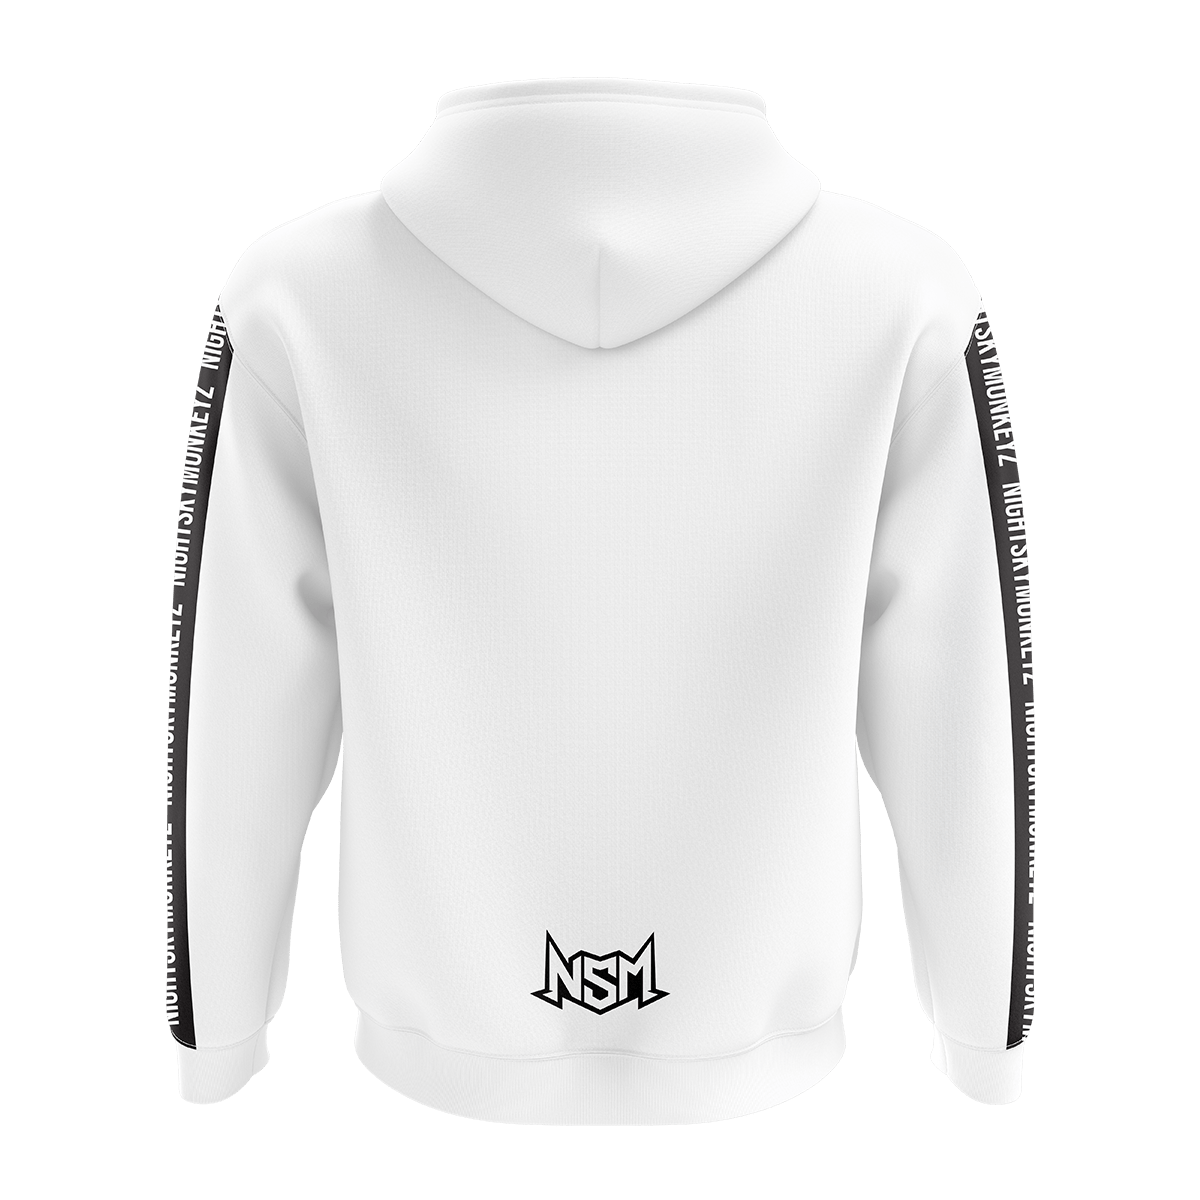 NIGHTSKYMONKEYZ - Crew Zipper 2021 - White